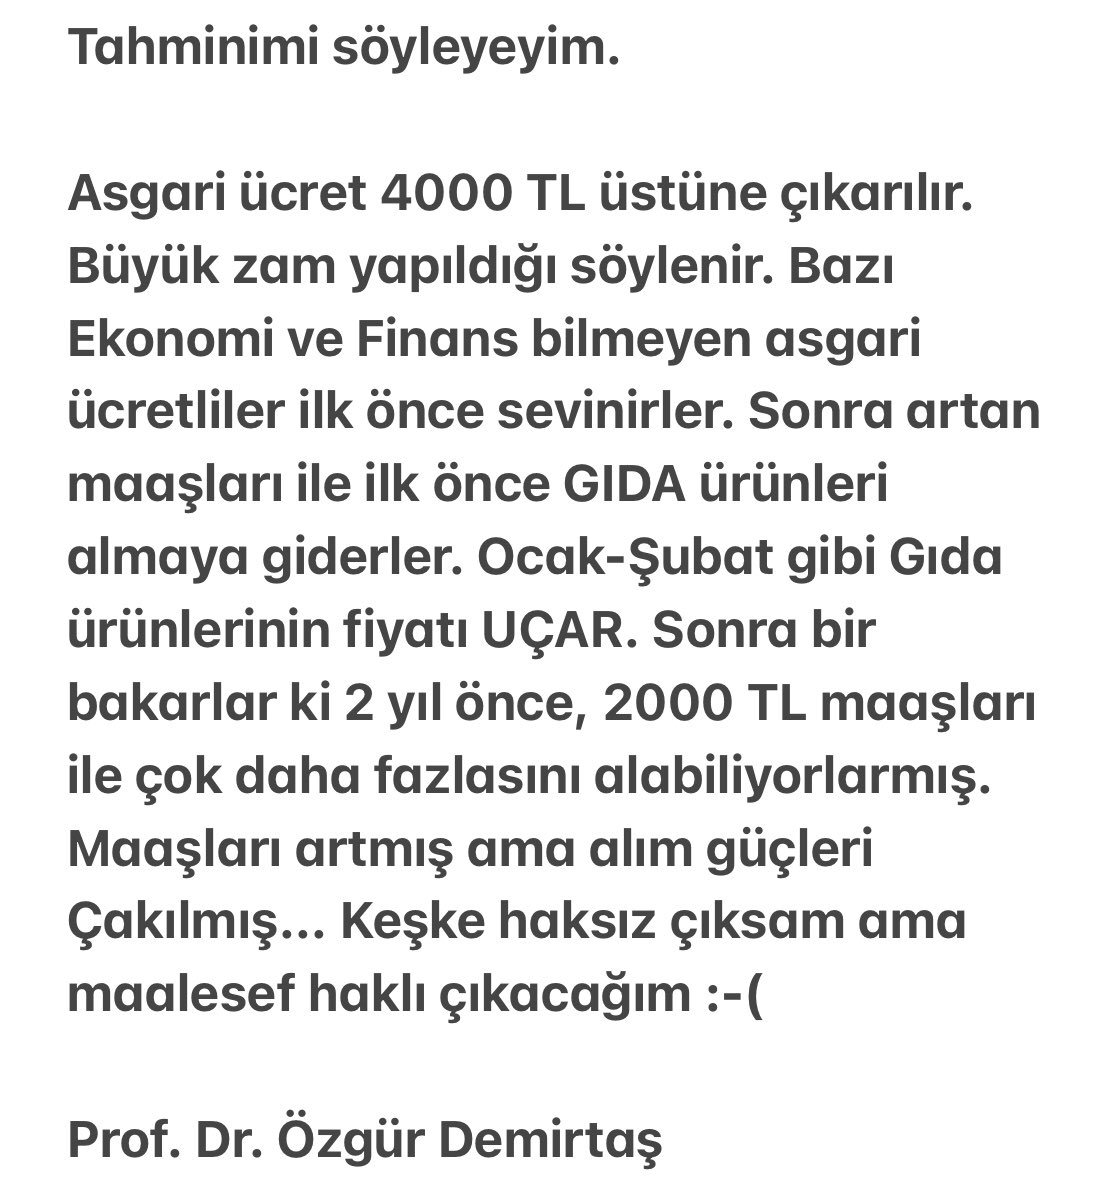 Özgür Demirtaş (@ProfDemirtas) on Twitter photo 2021-12-13 18:52:53